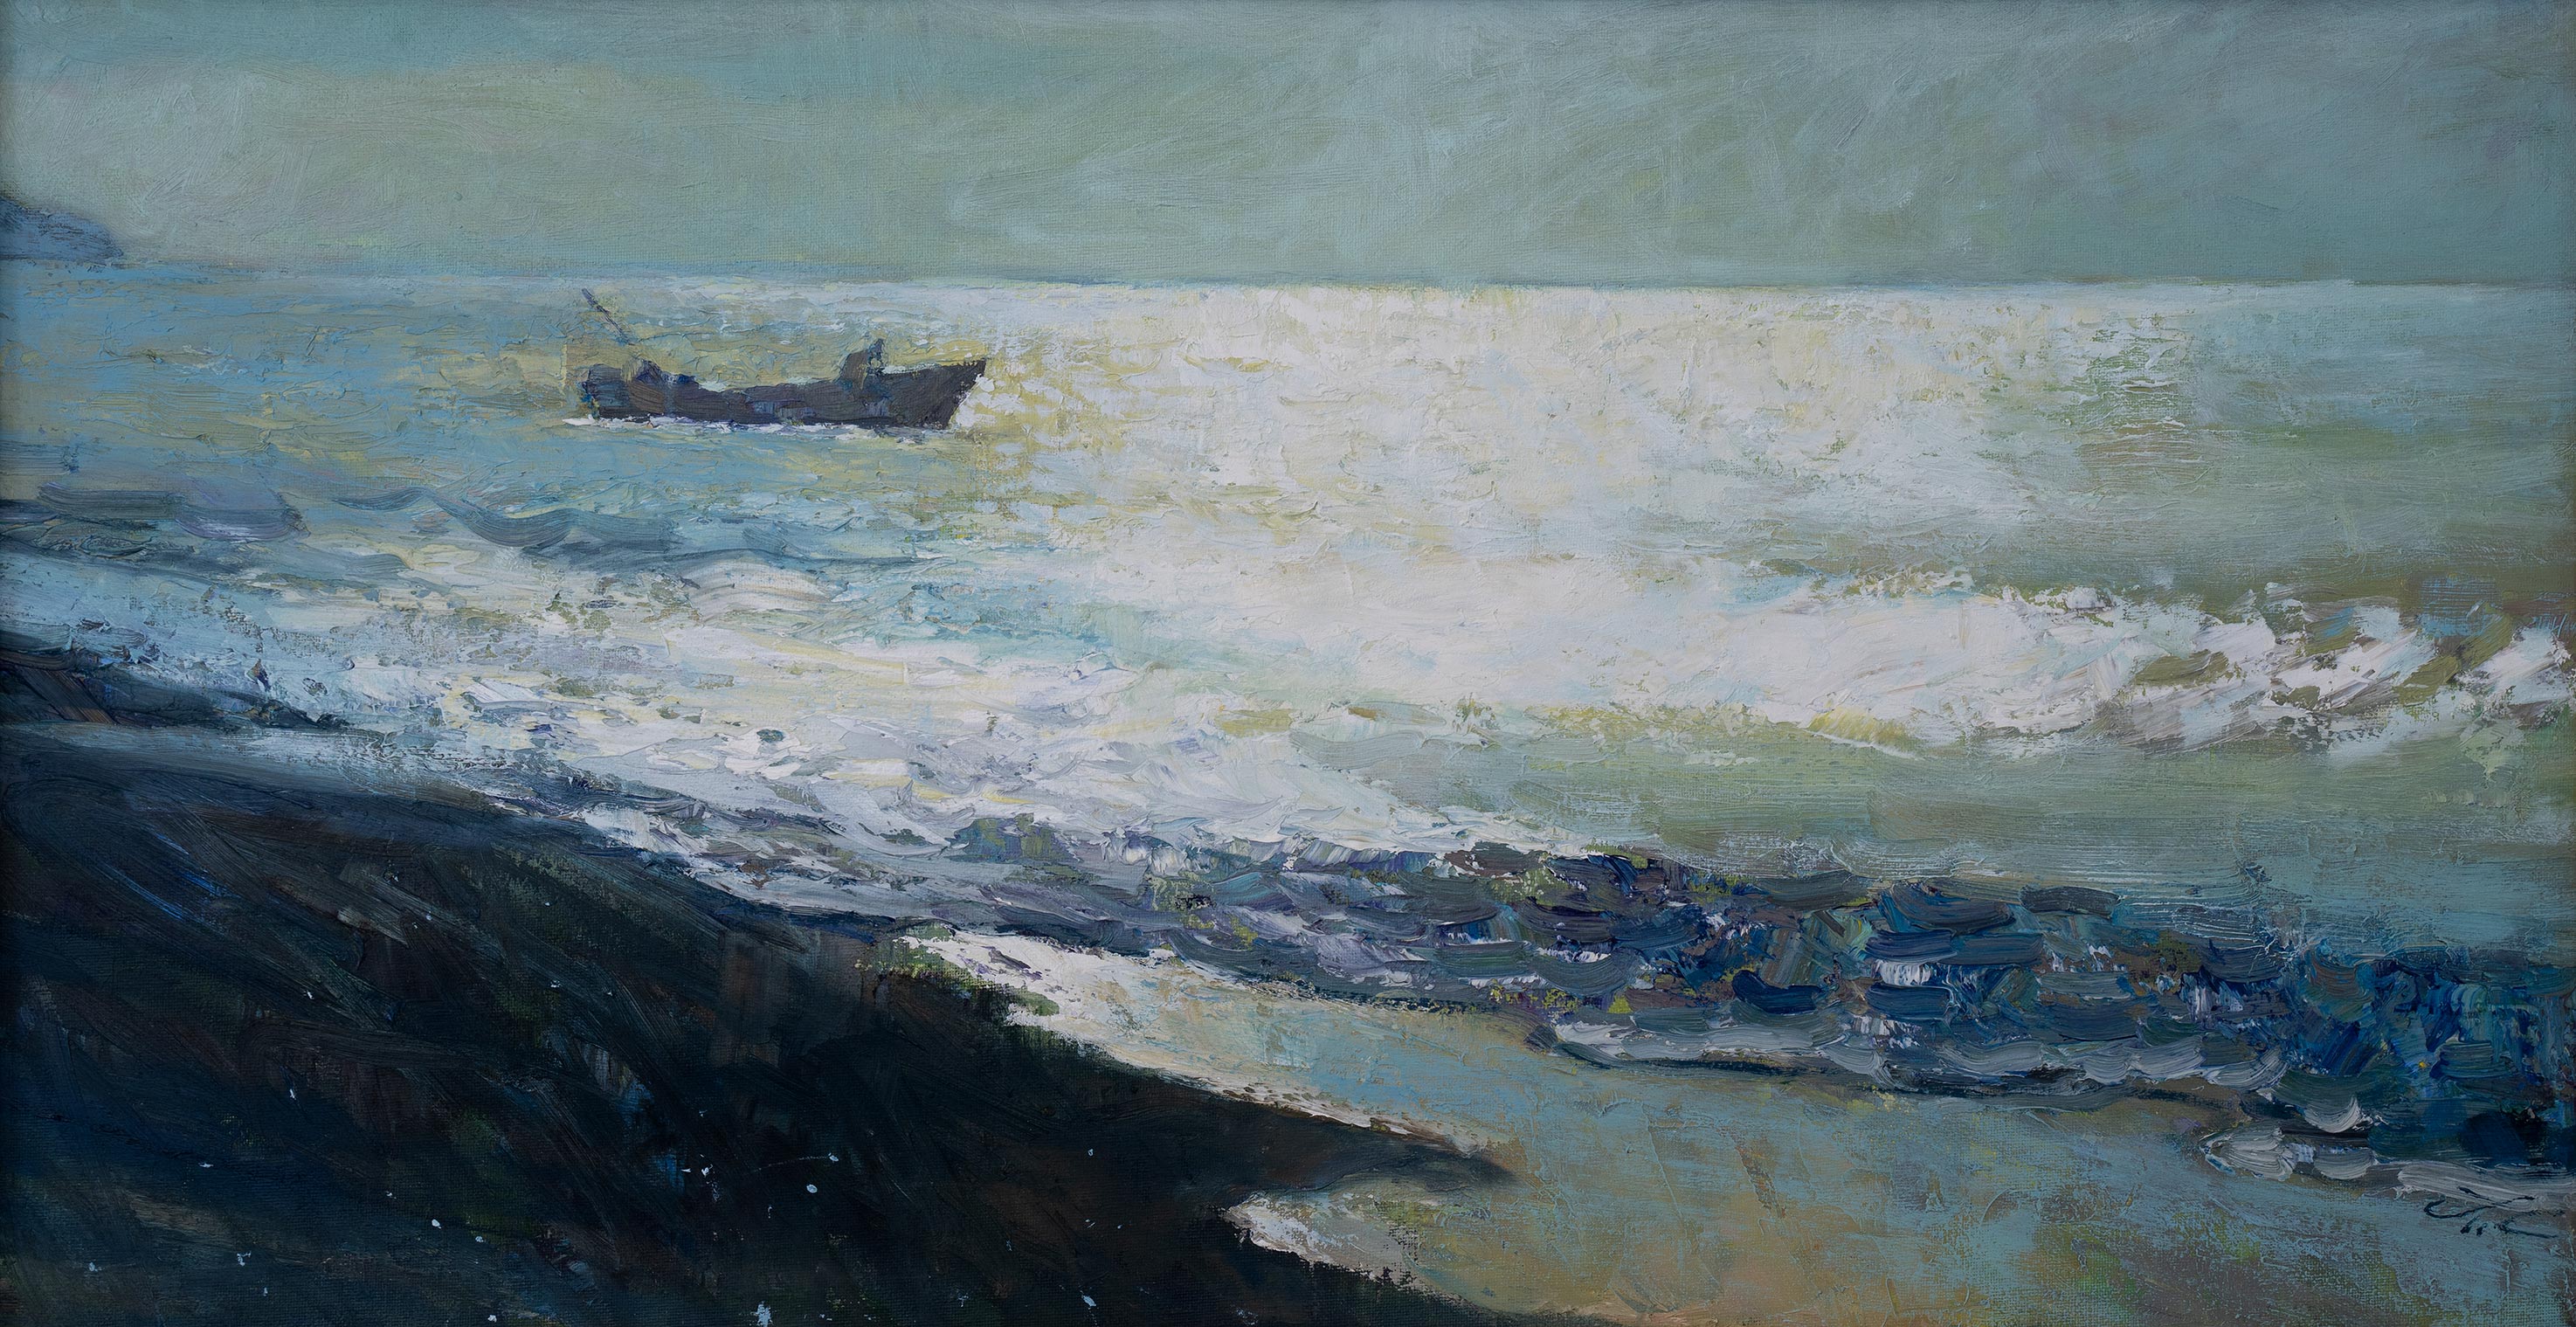 Boat in the Ocean - 1, Sergei Prokhorov, Buy the painting Oil